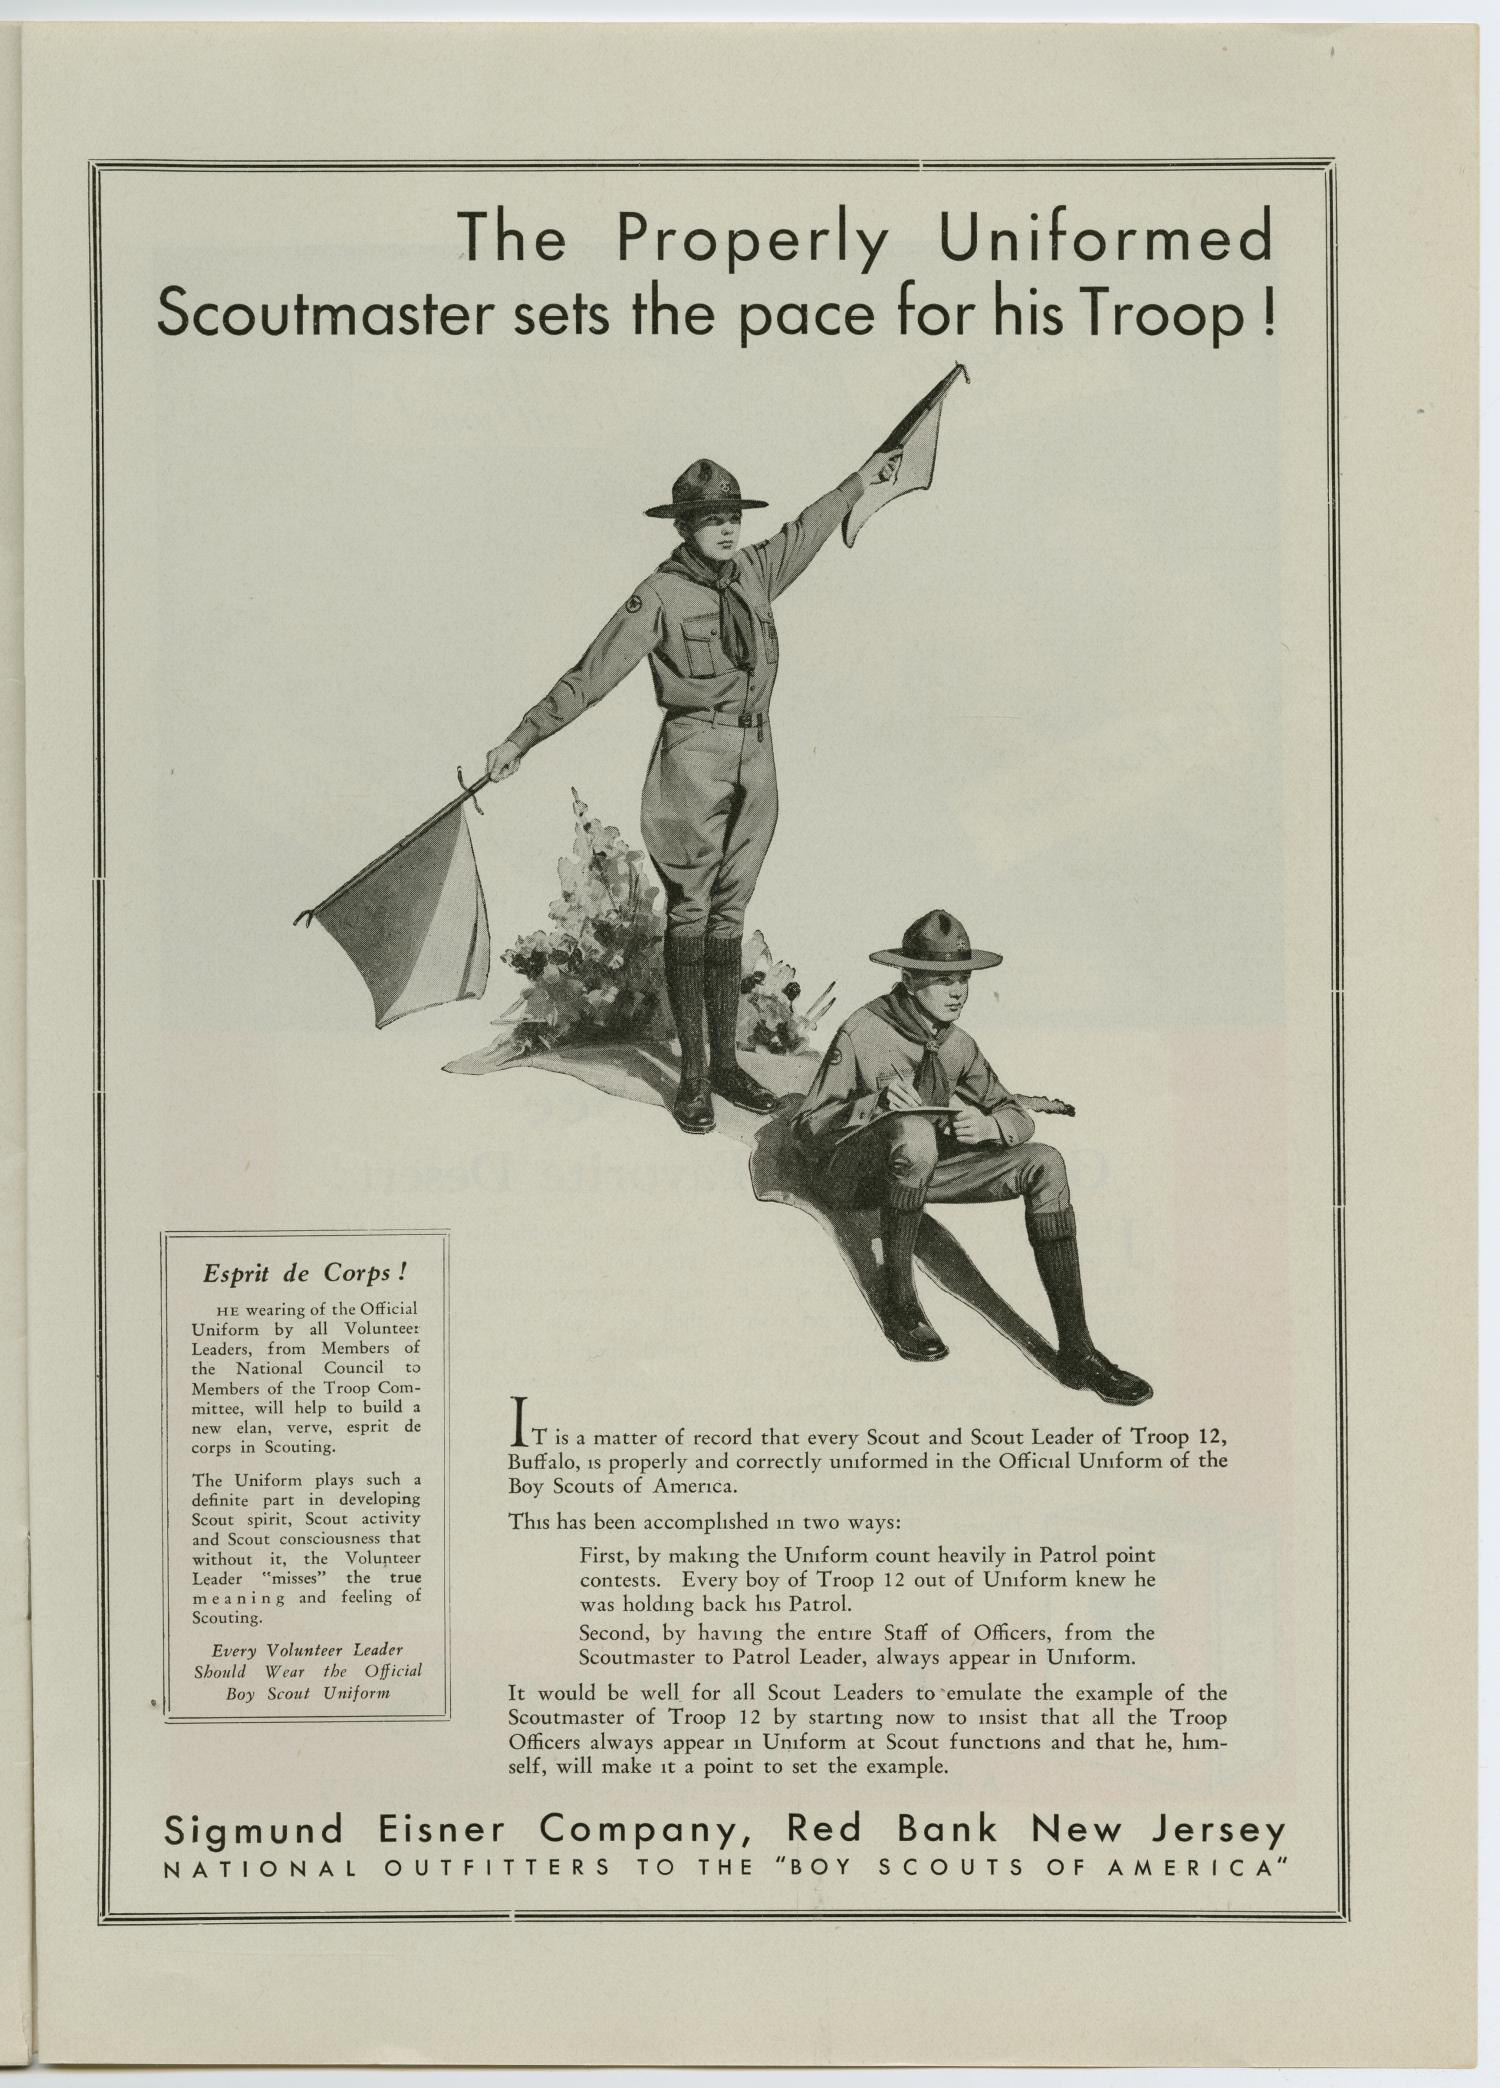 Scouting, Volume 18, Number 4, April 1930
                                                
                                                    111
                                                